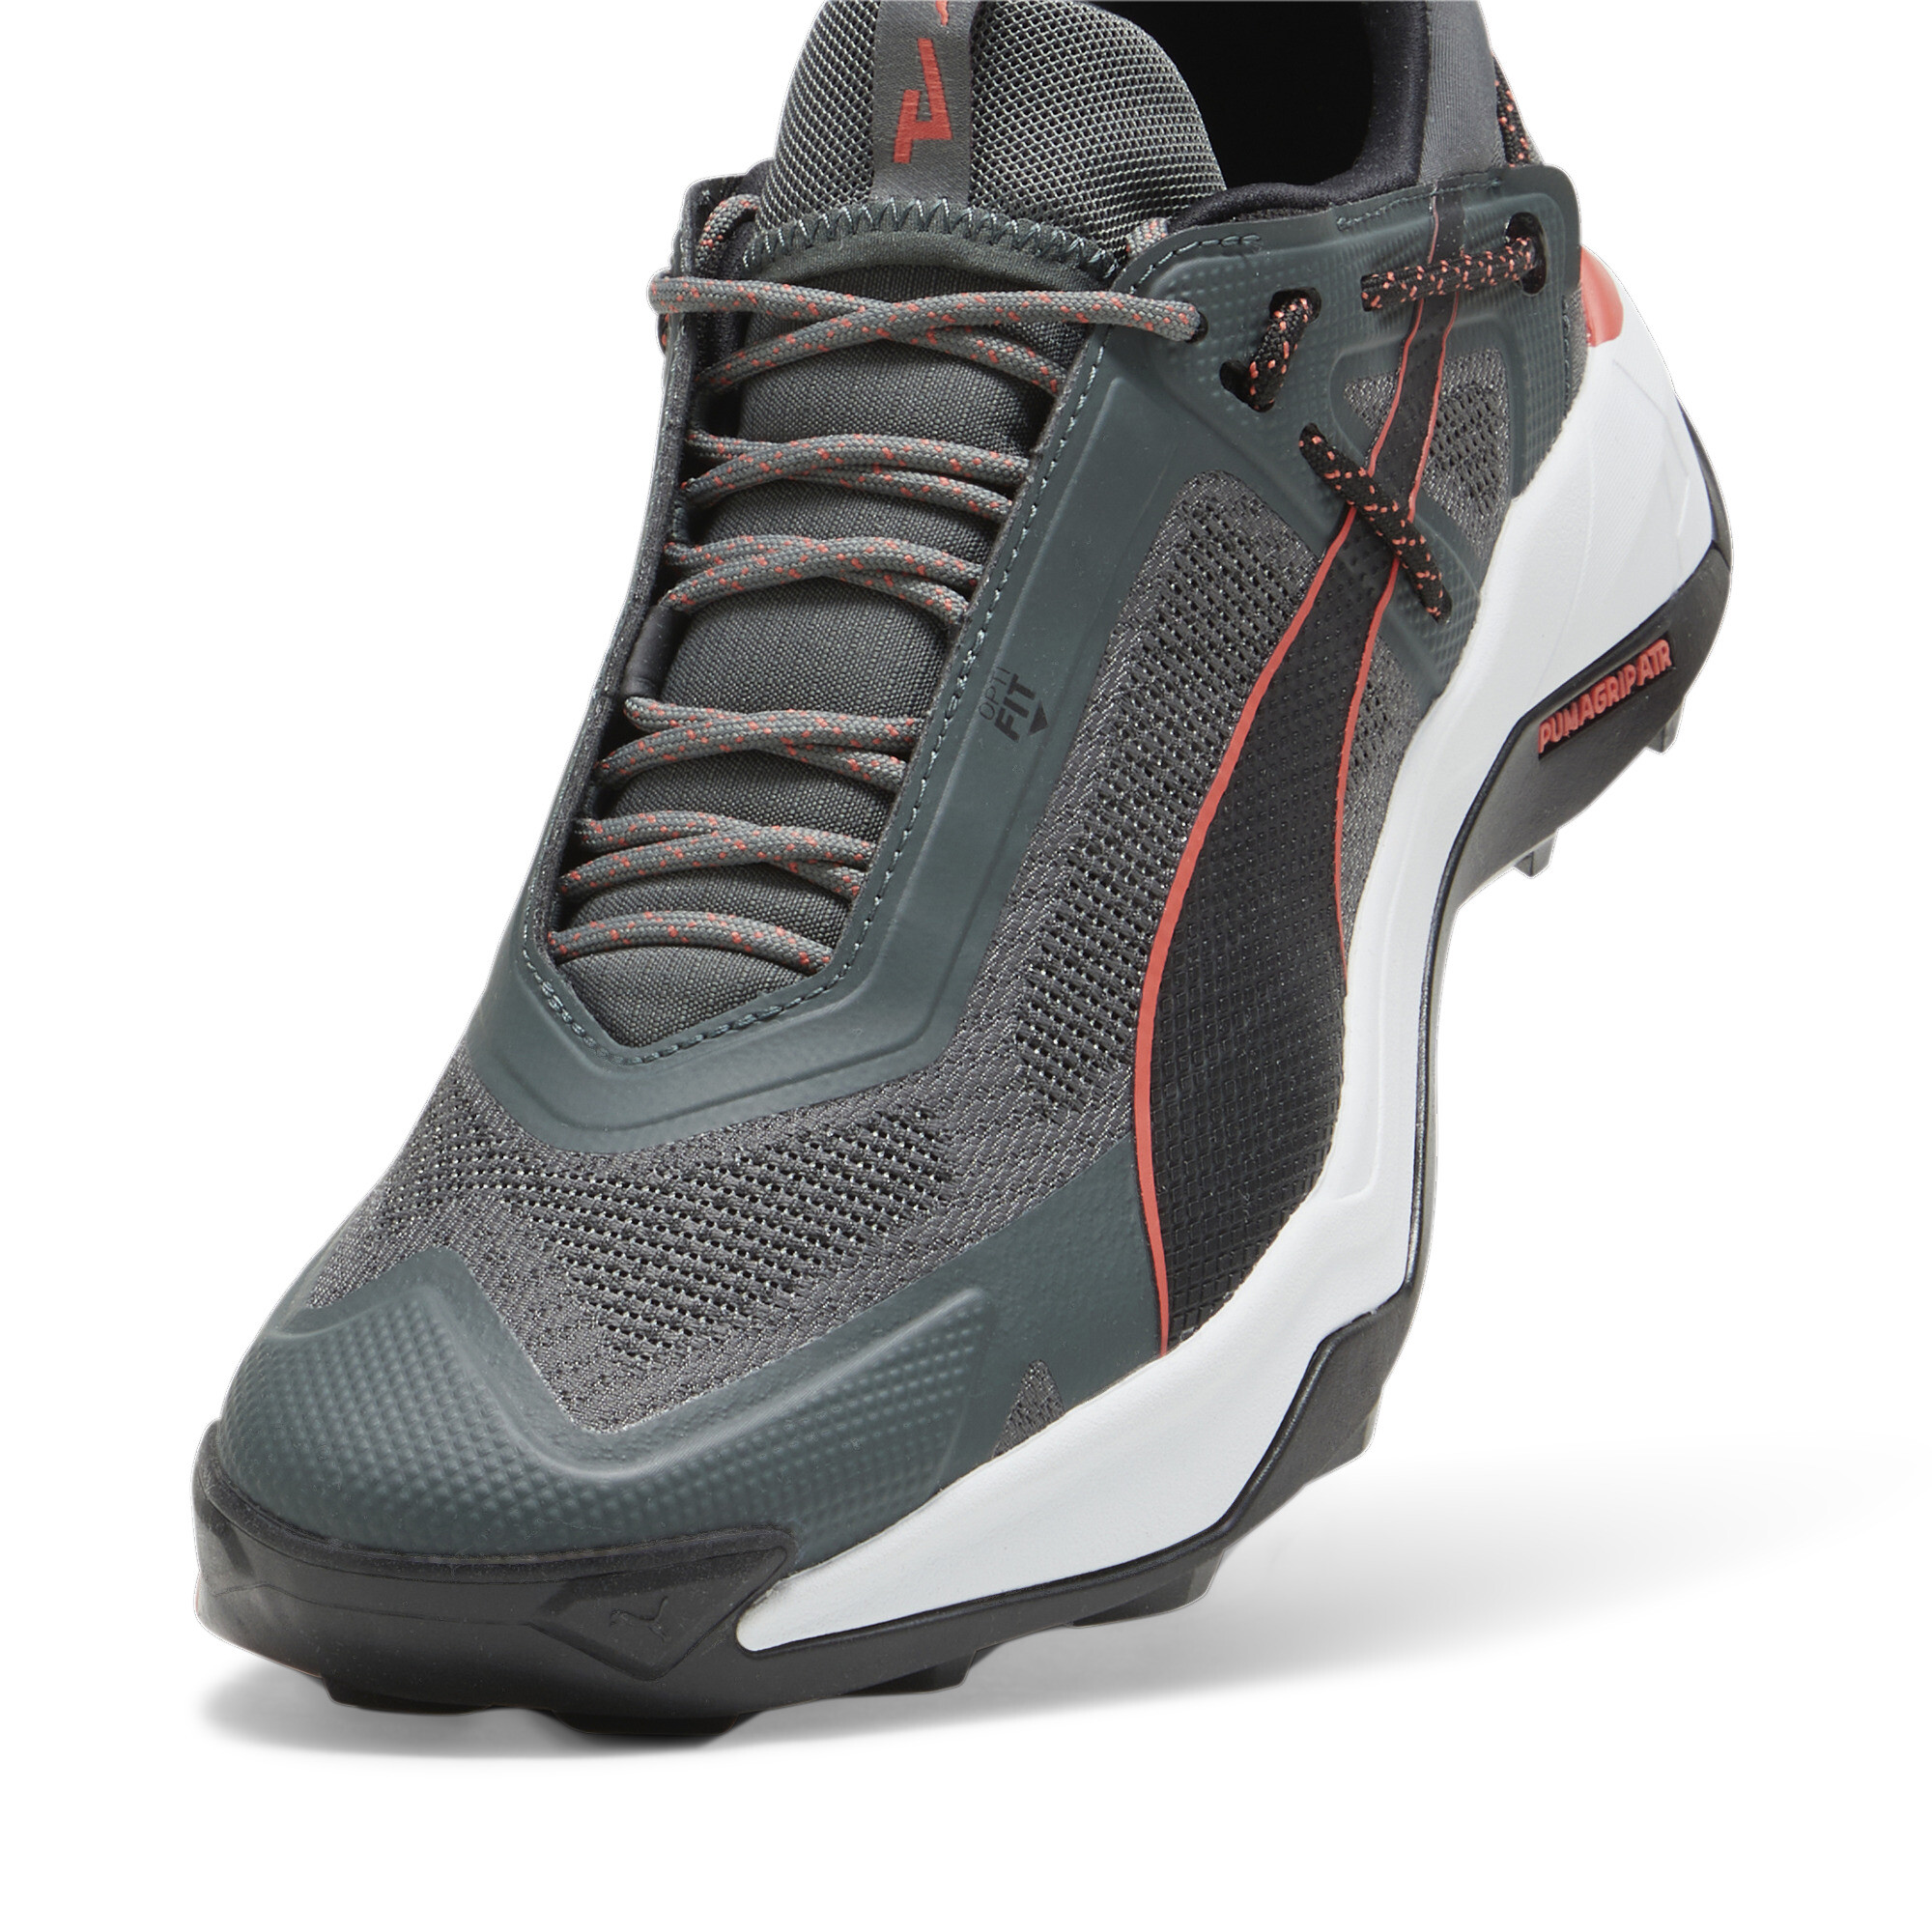 Men's PUMA Explore NITROâ¢ Hiking Shoes In Gray, Size EU 44